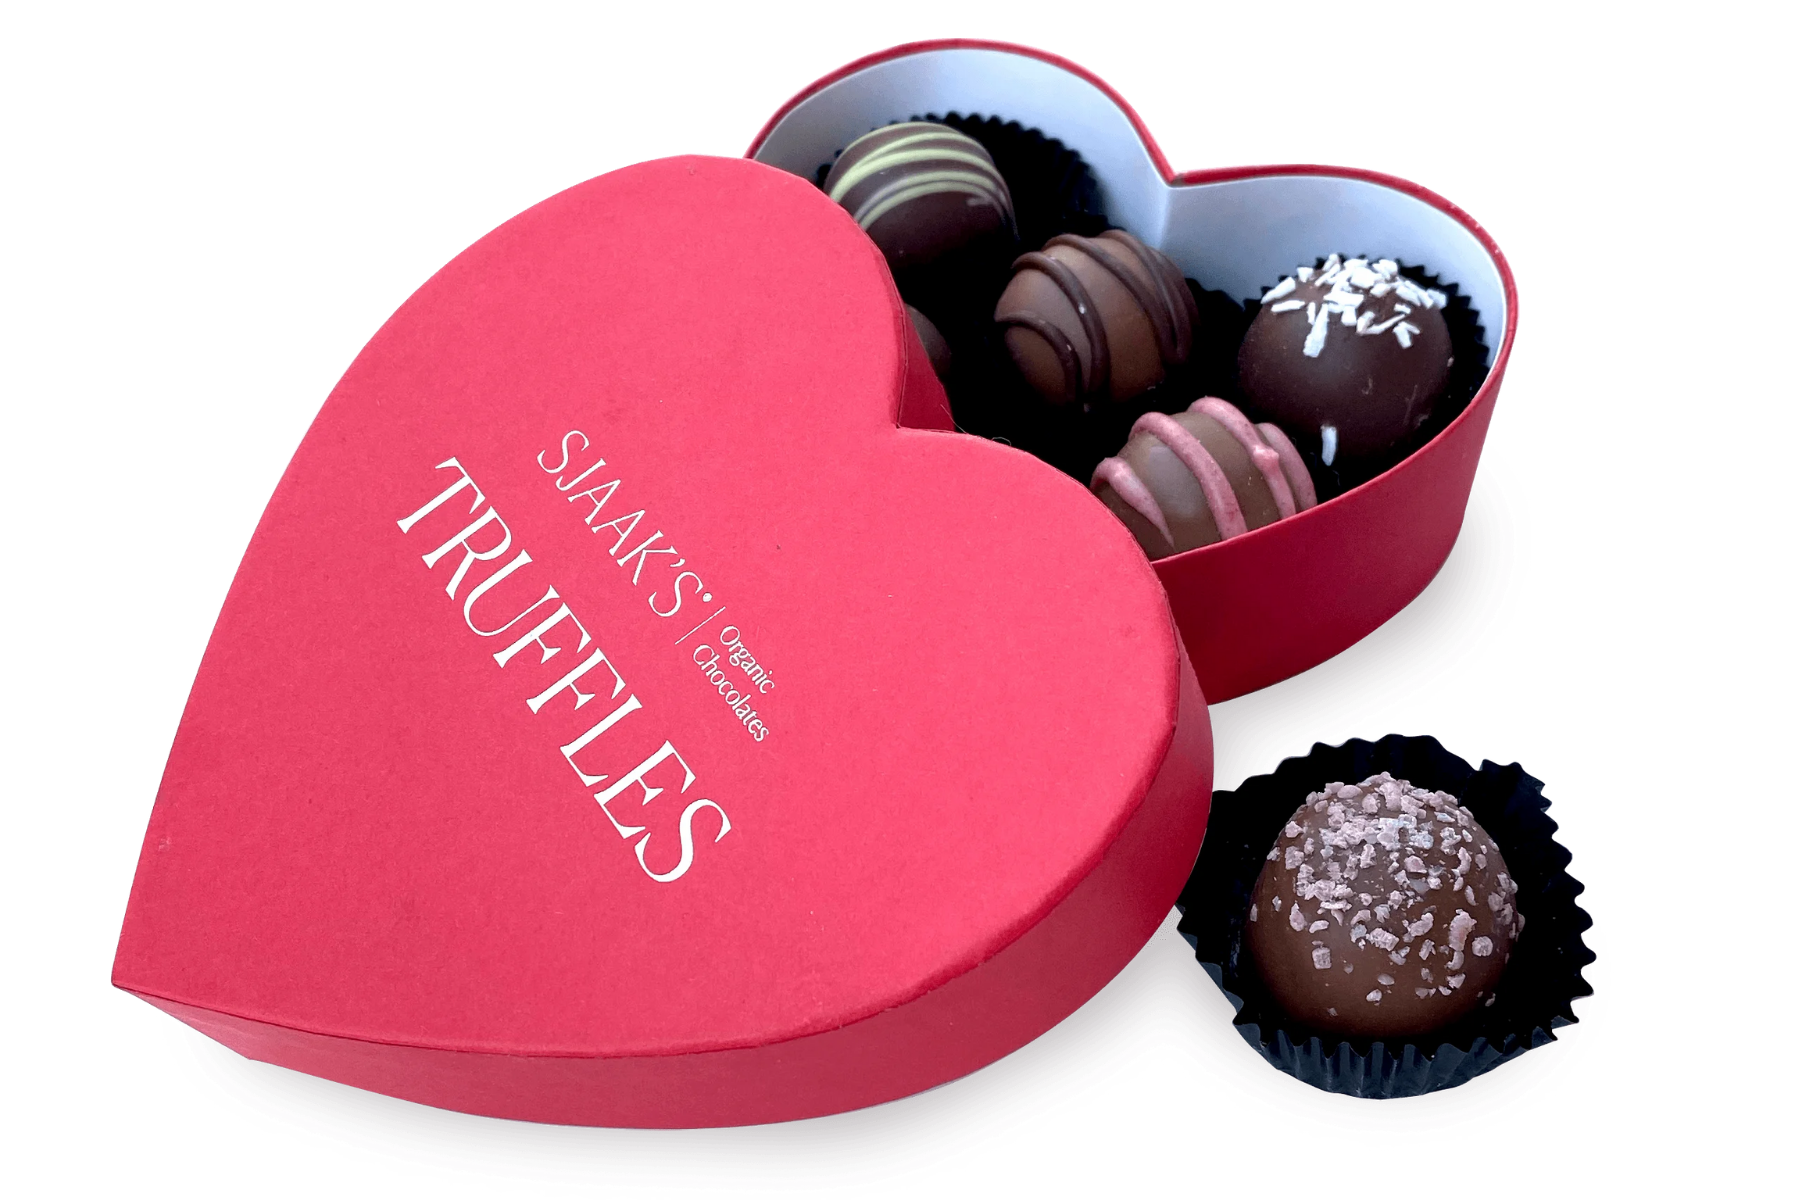 a heart-shaped box of Sjaak's vegan chocolate truffles